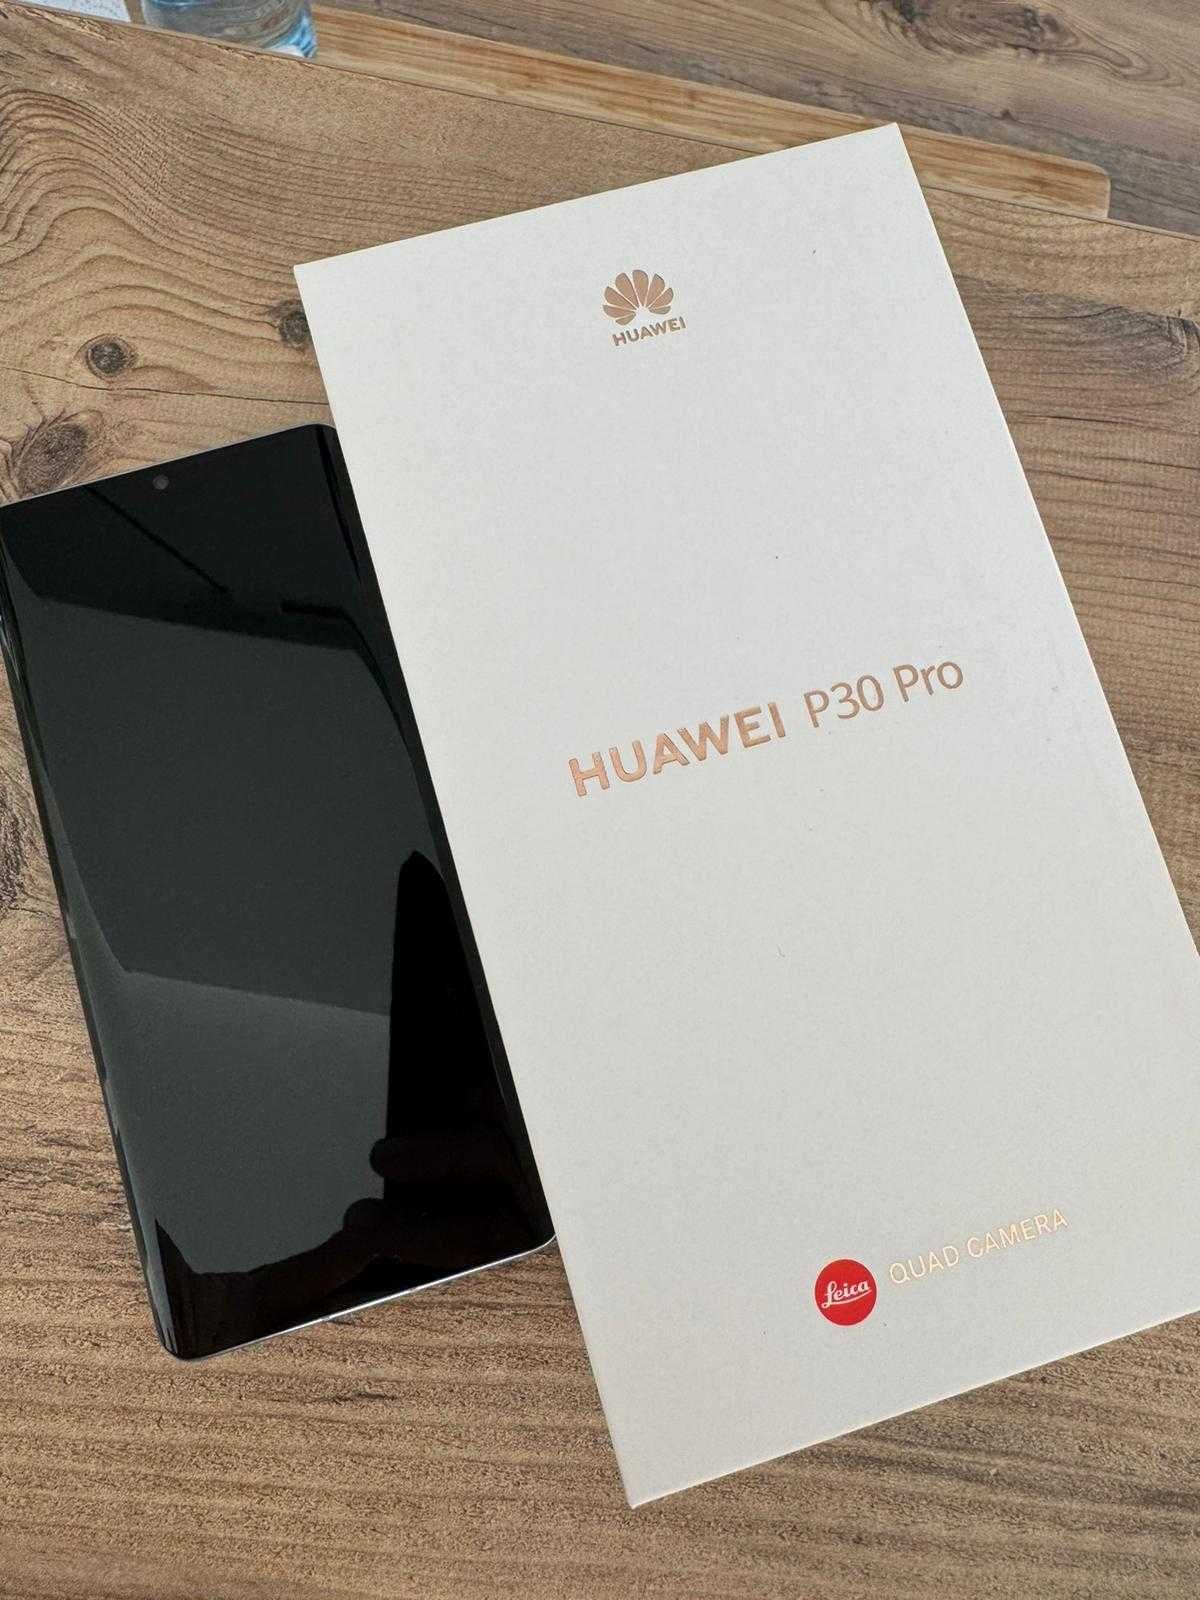 Huawei P30 pro 128/6